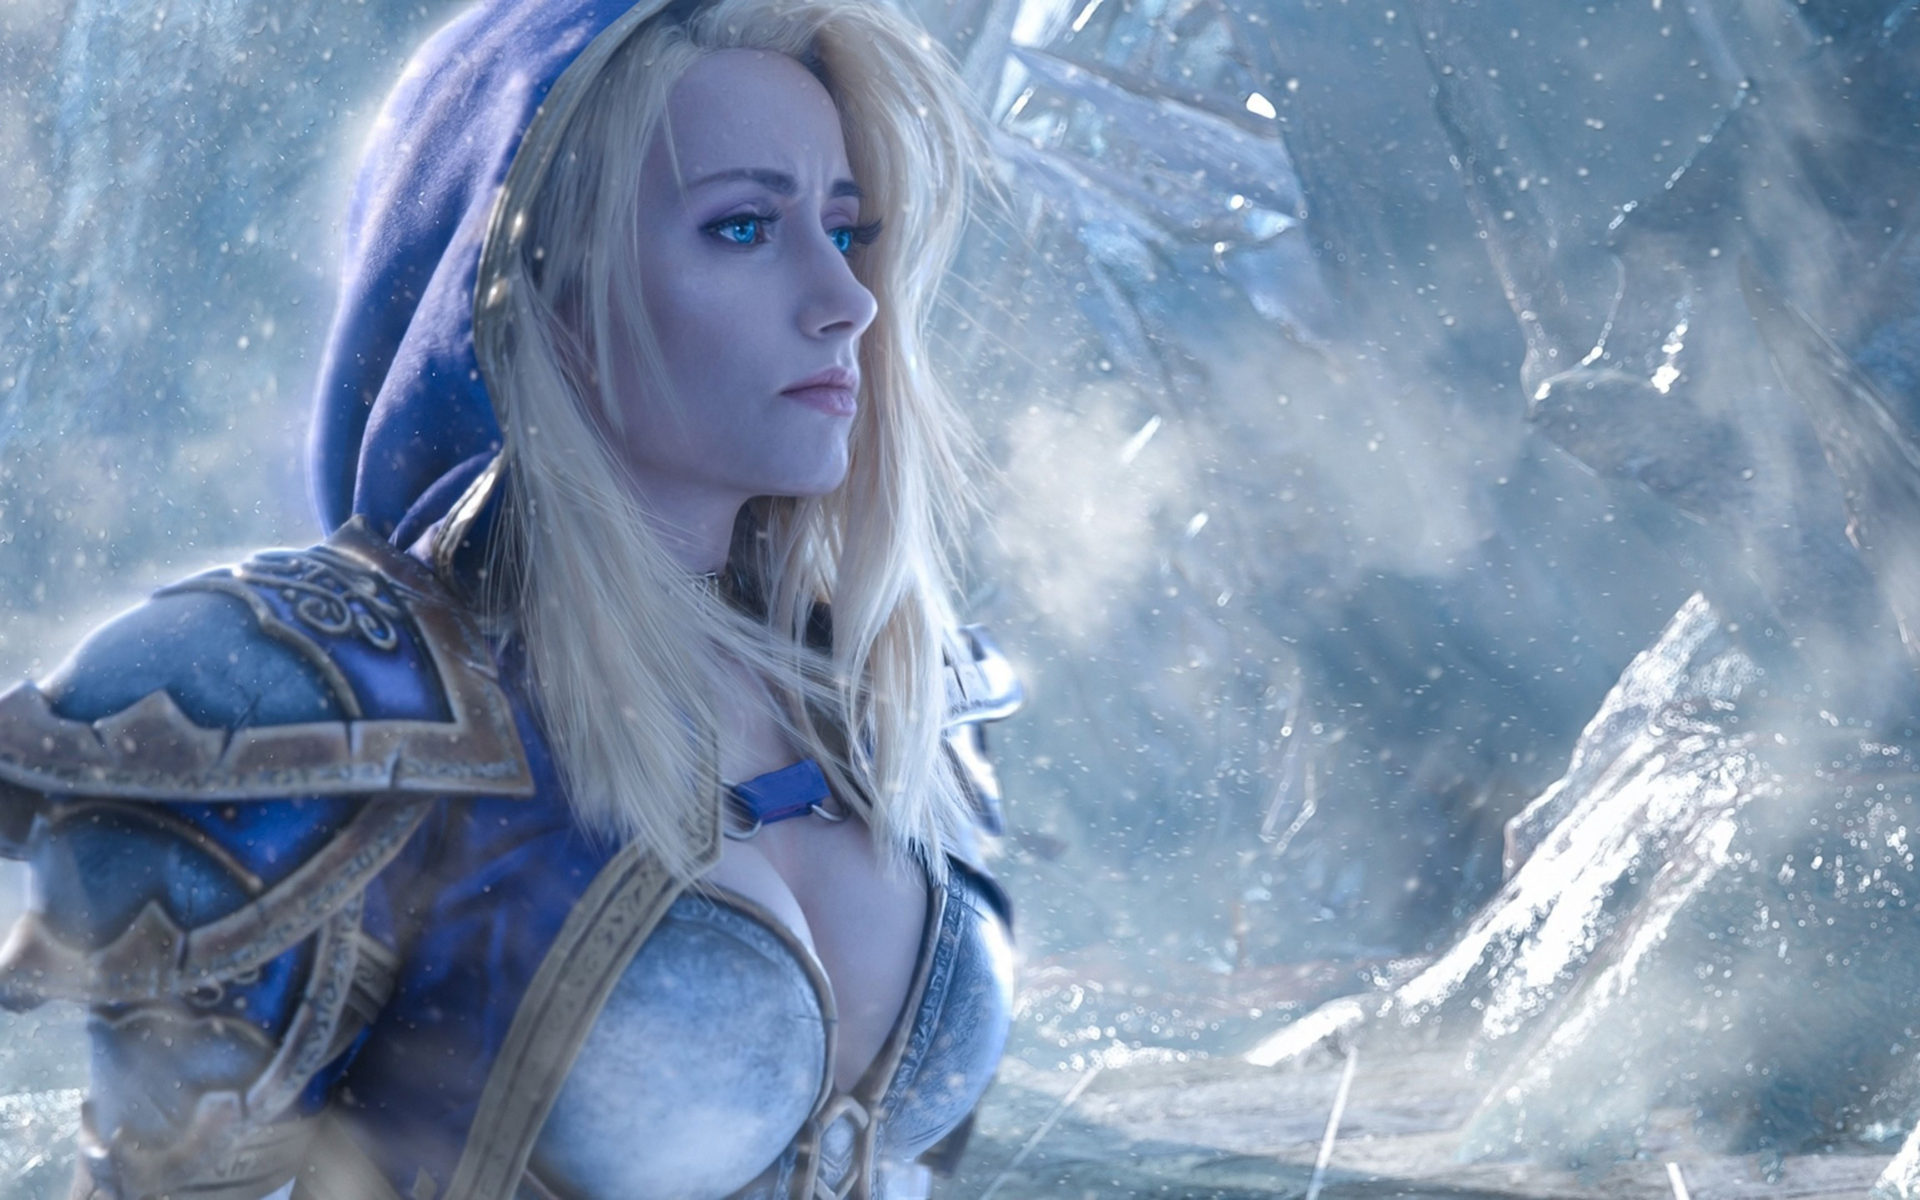 World of Warcraft Jaina Proudmoore and Arthas Menethil fantasy art image, Wallpaper13.com